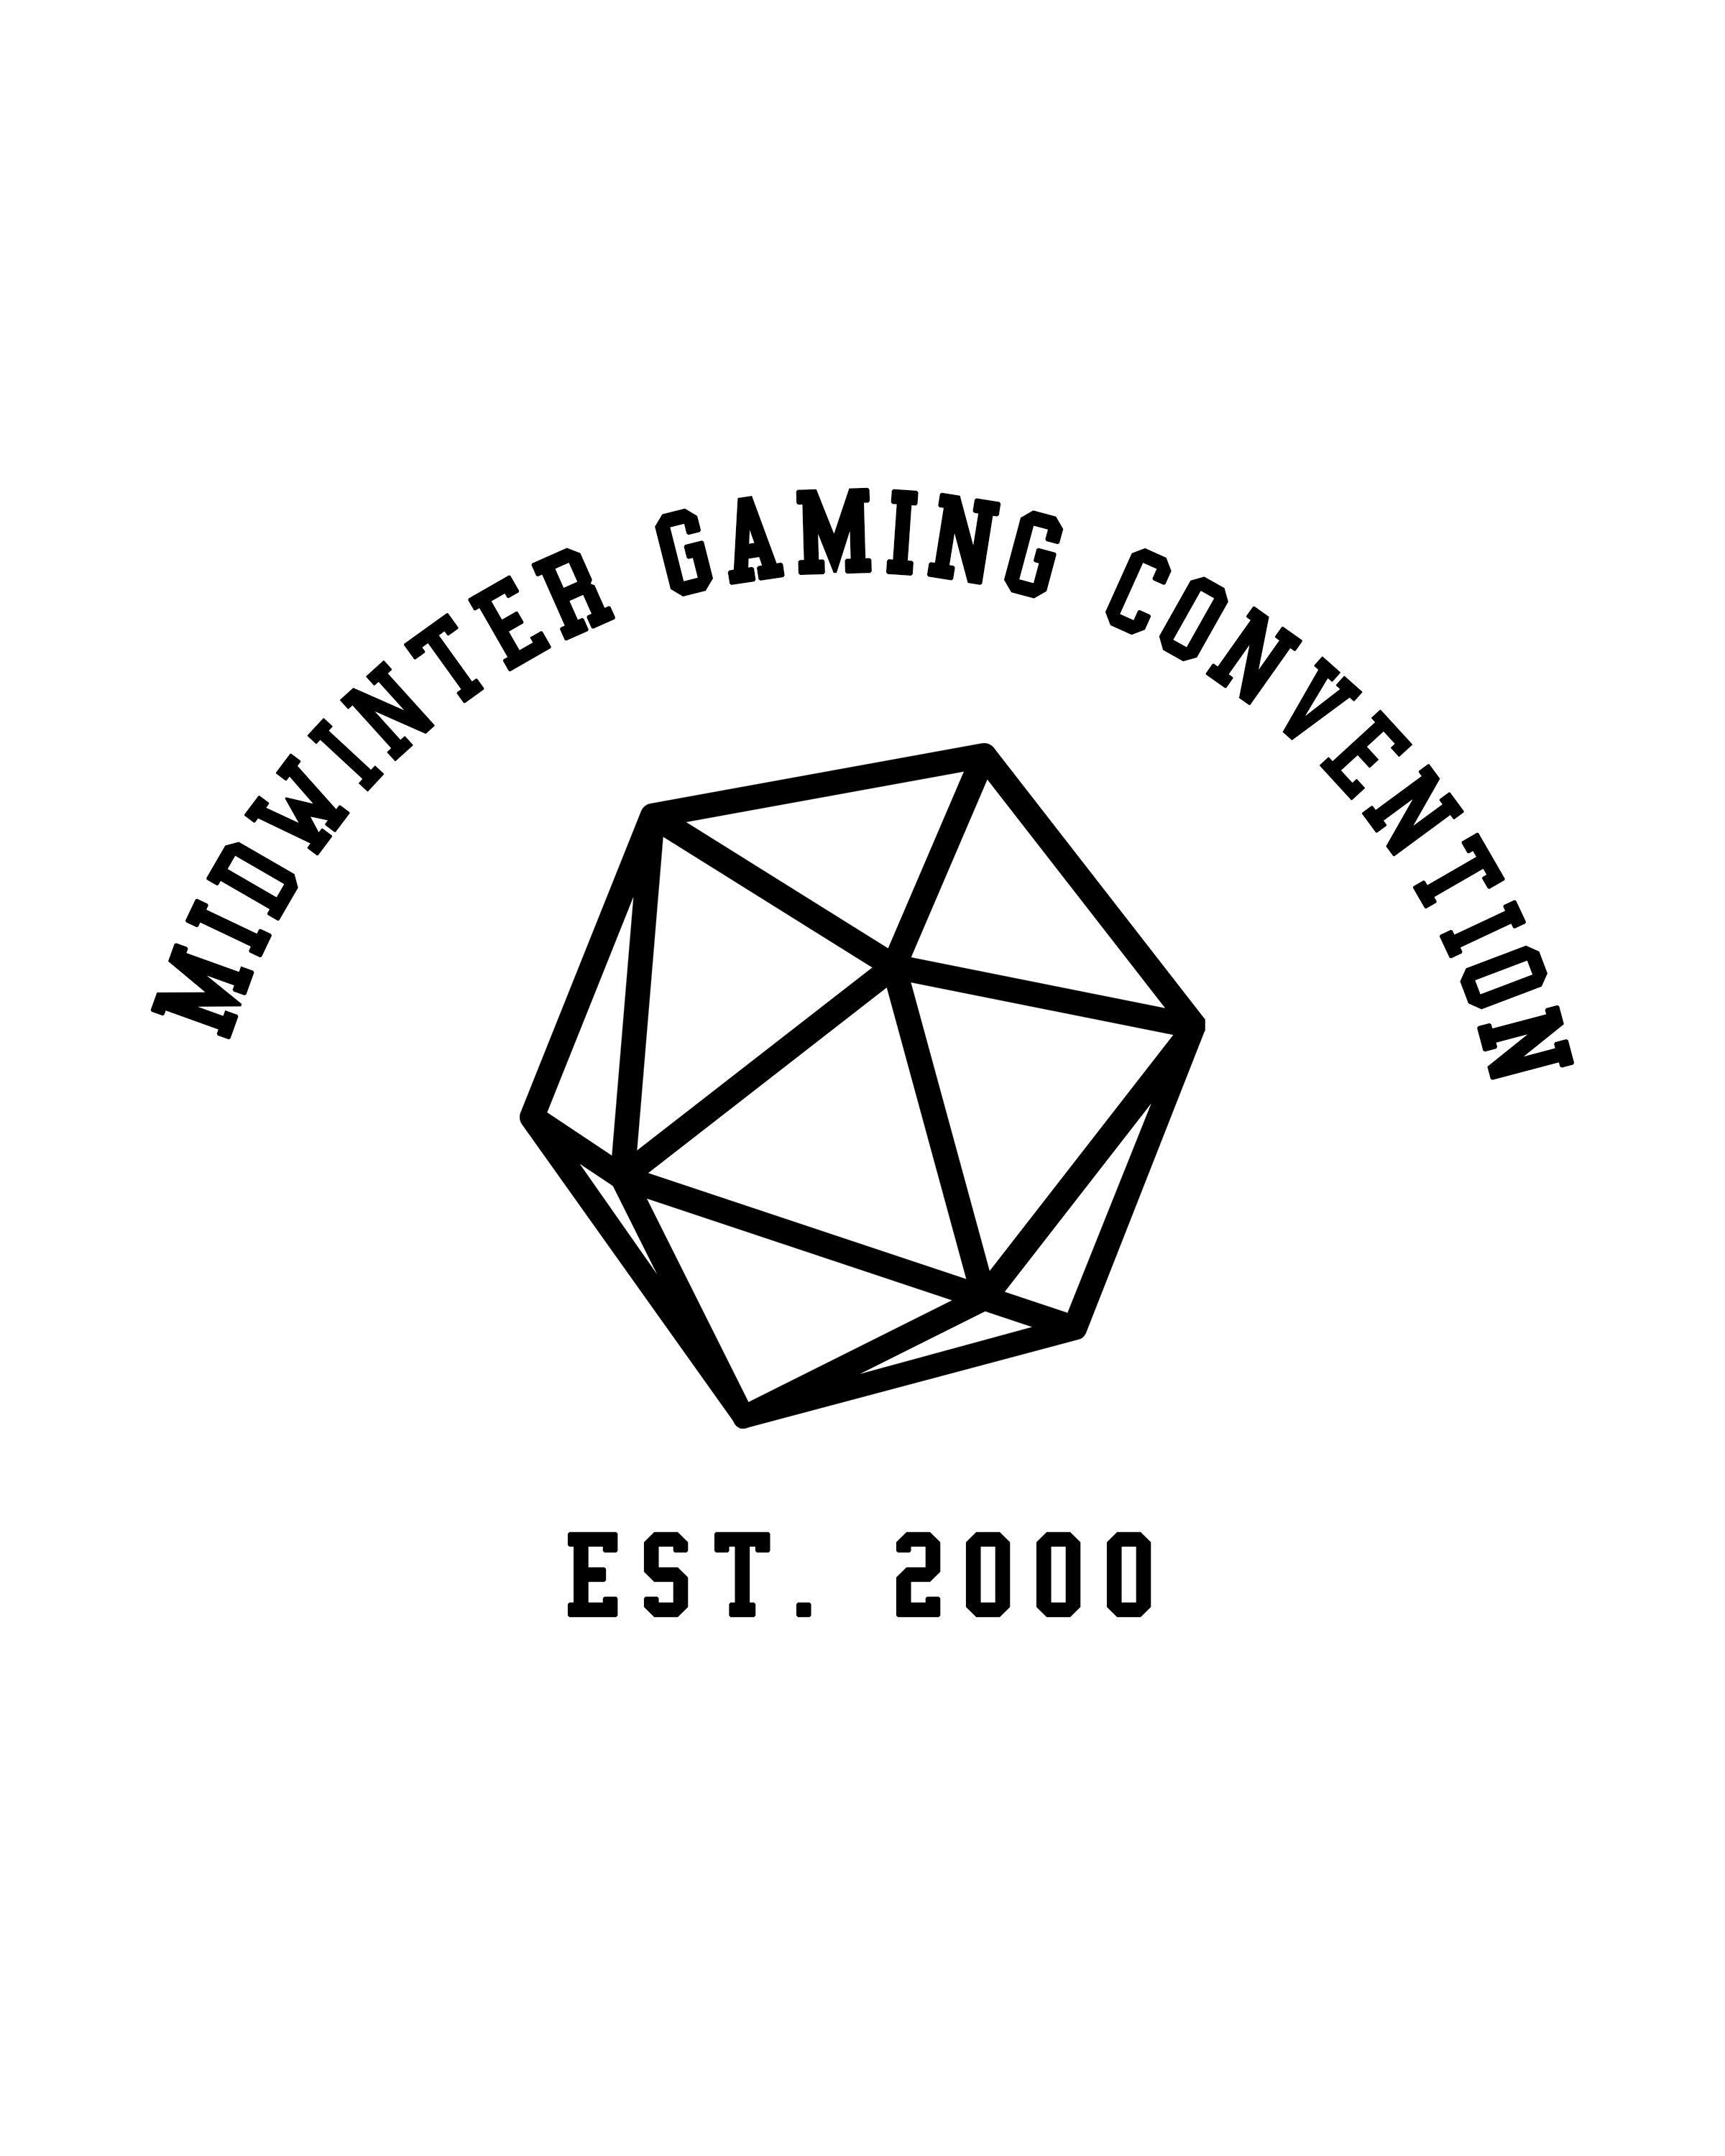 Midwinter Gaming Convention » Urban Milwaukee